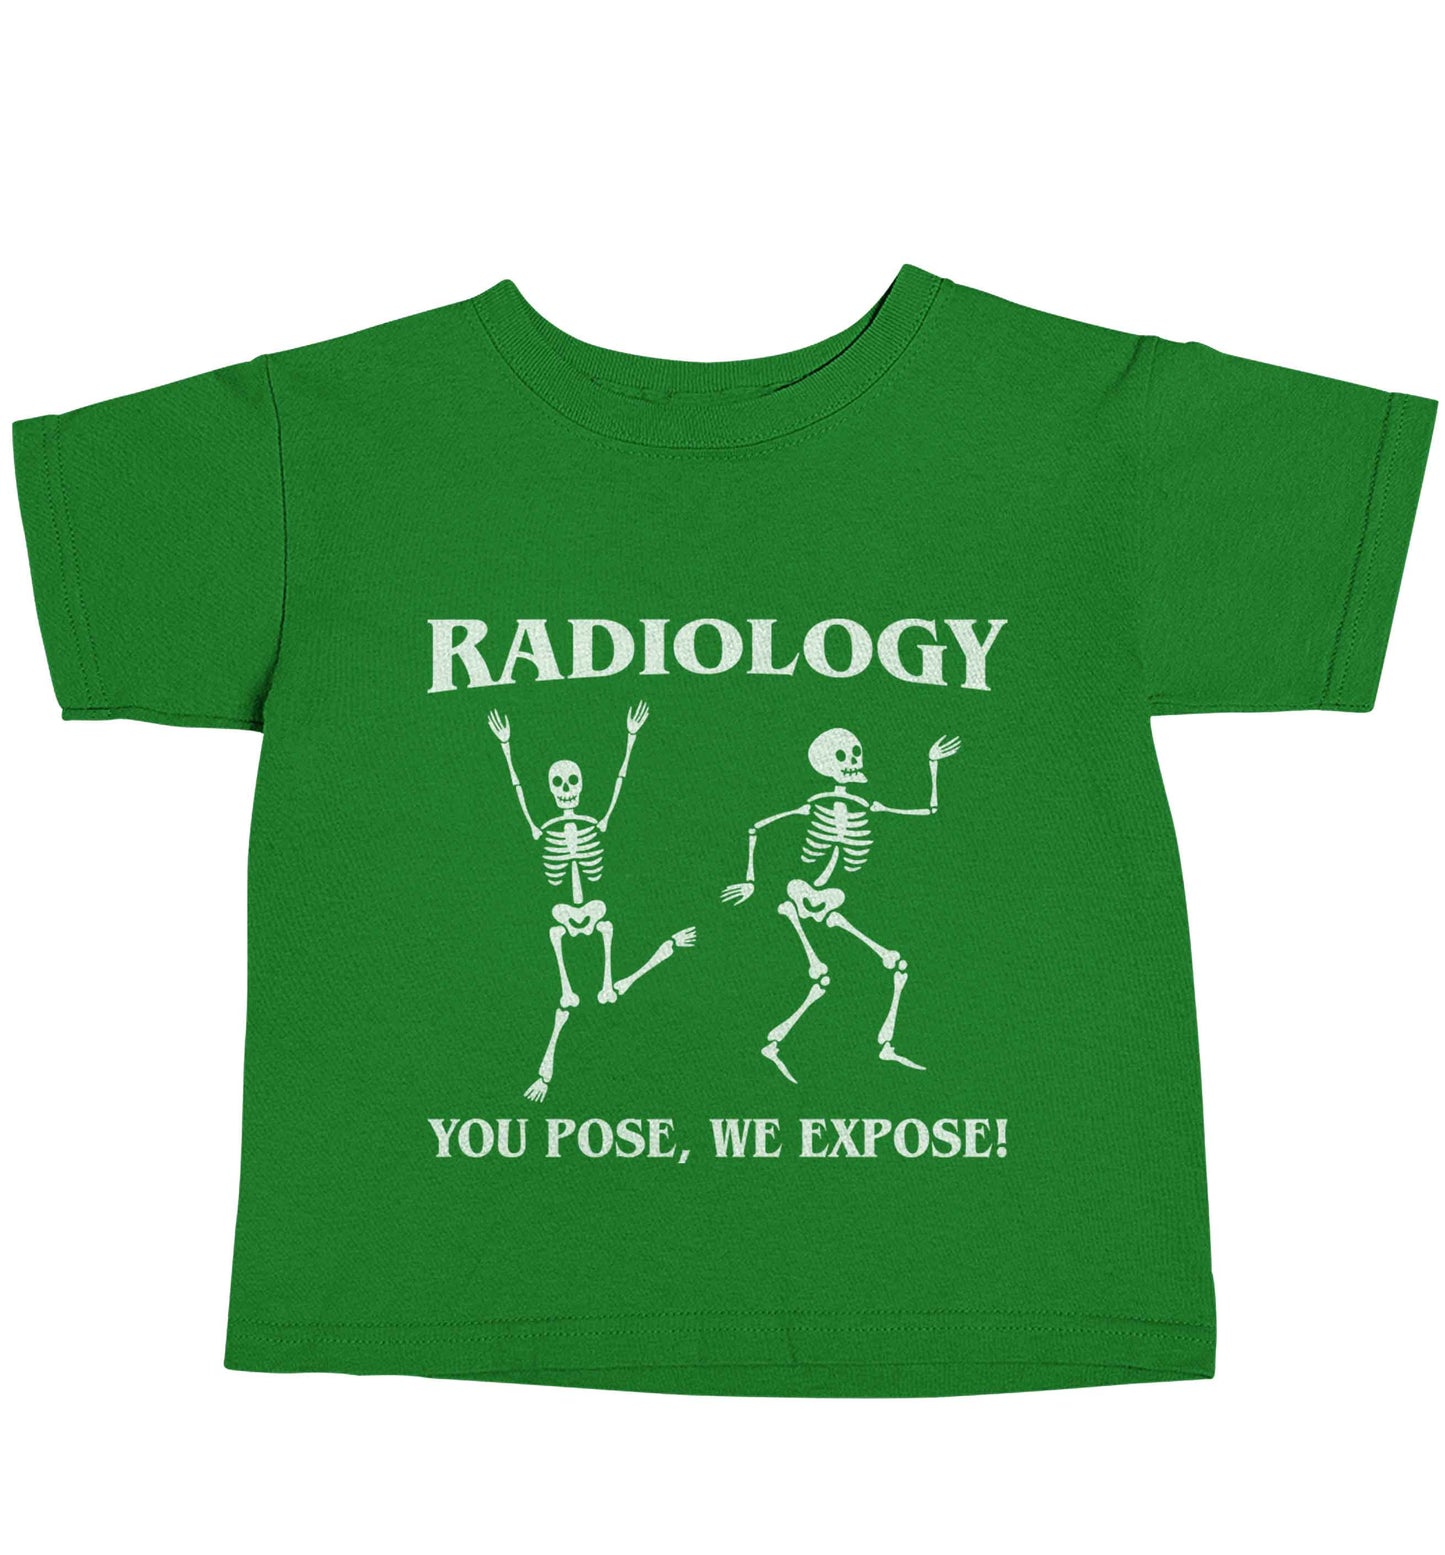 Radiology you pose we expose green baby toddler Tshirt 2 Years